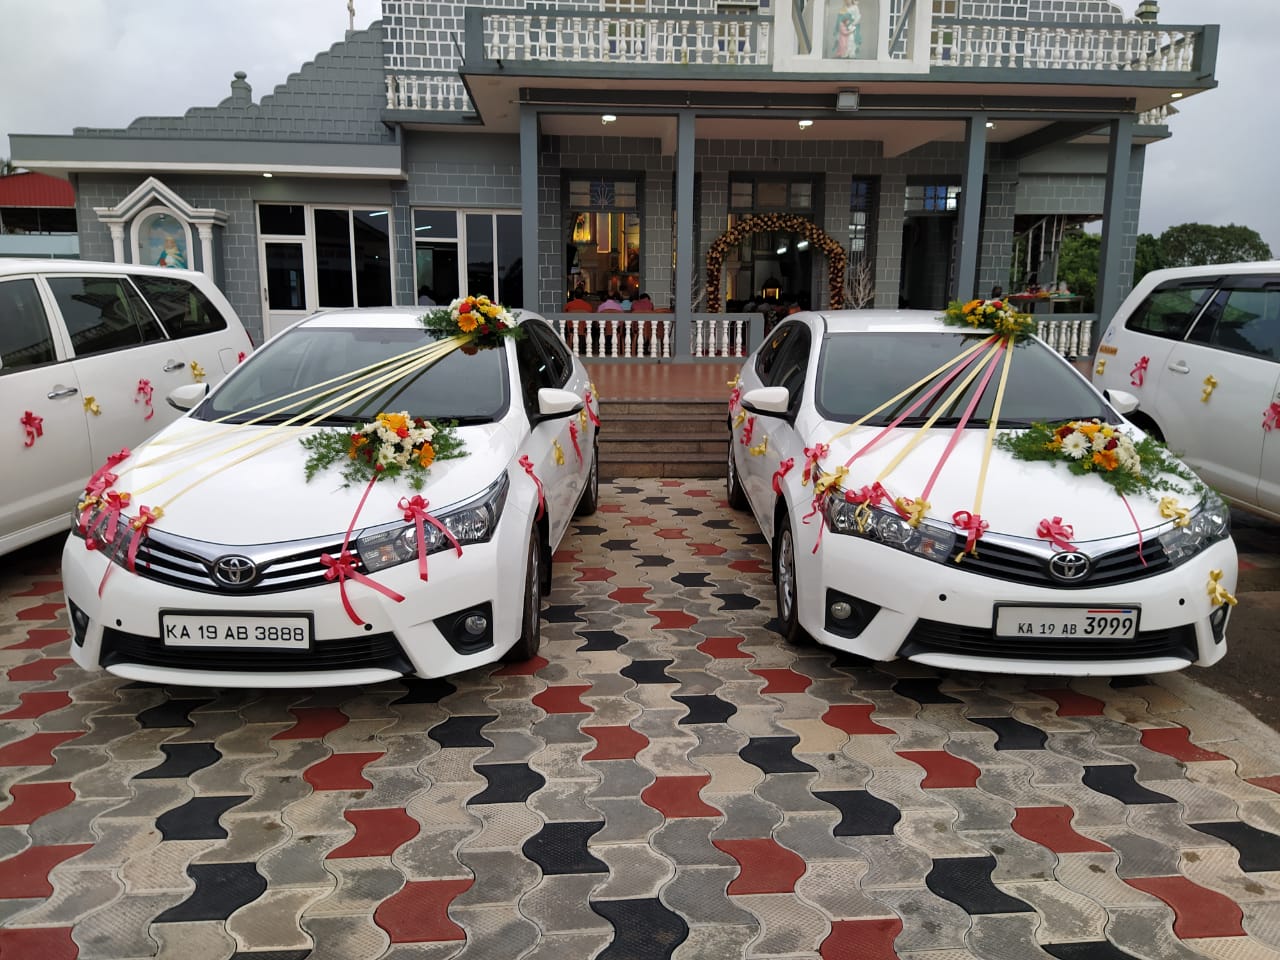 Blog - 7 Stylish Ideas To Decorate The Perfect Wedding Car